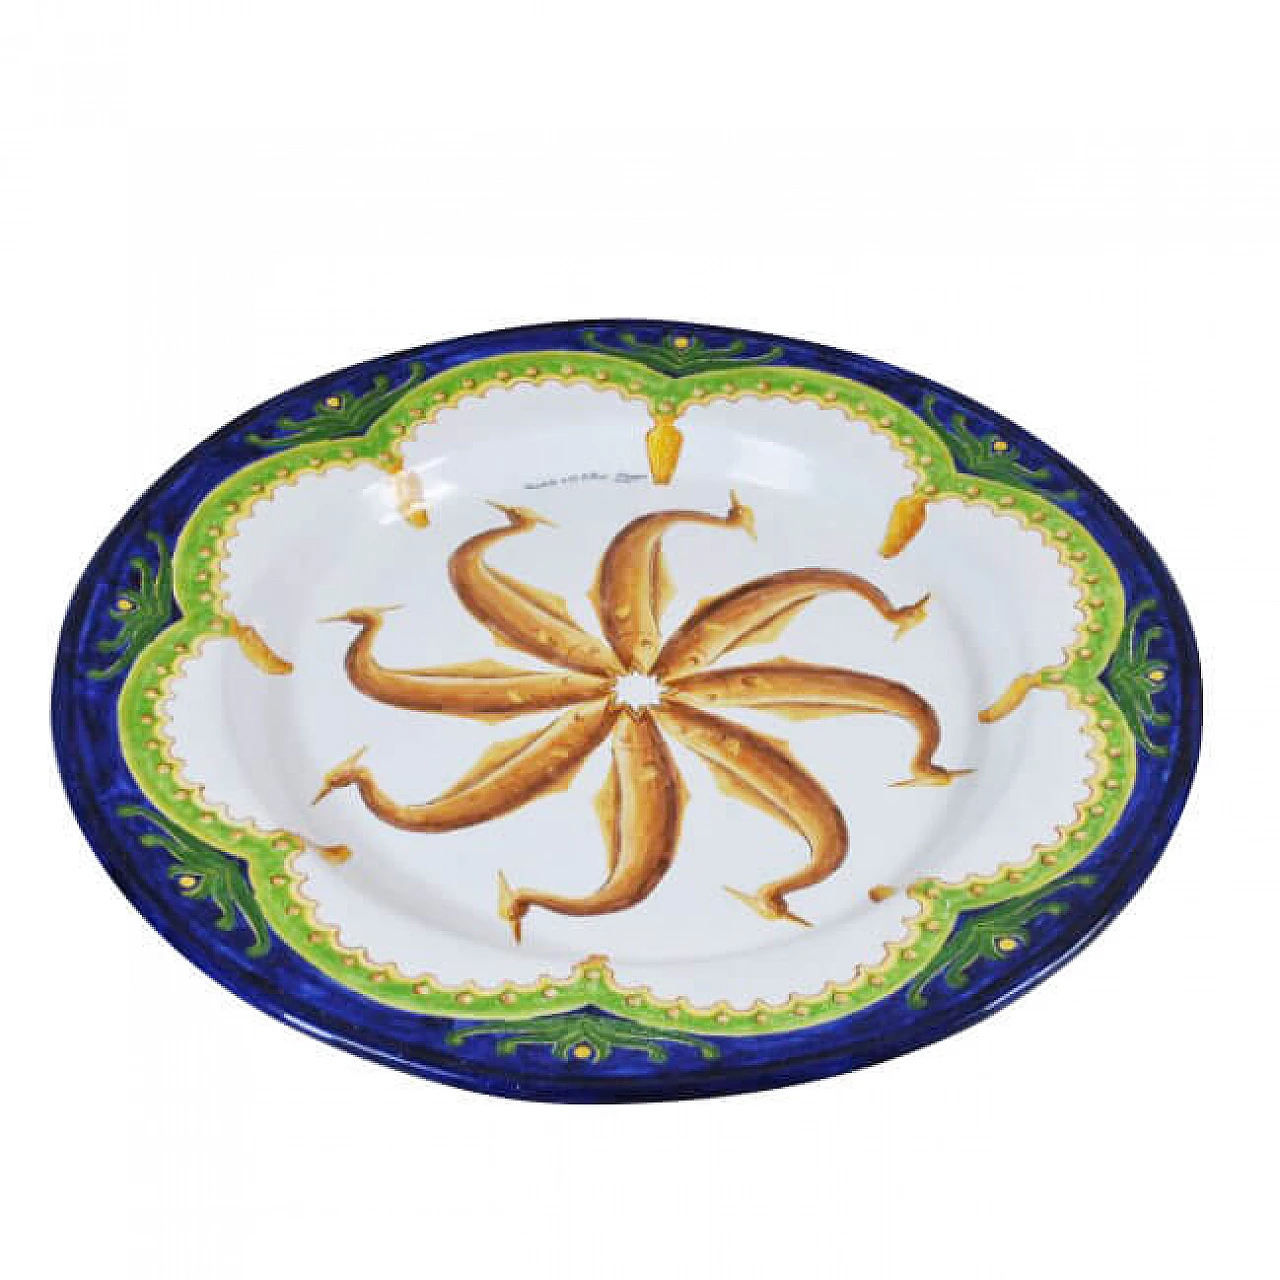 Decorative ceramic plate by Tarshito, 2000 1220713